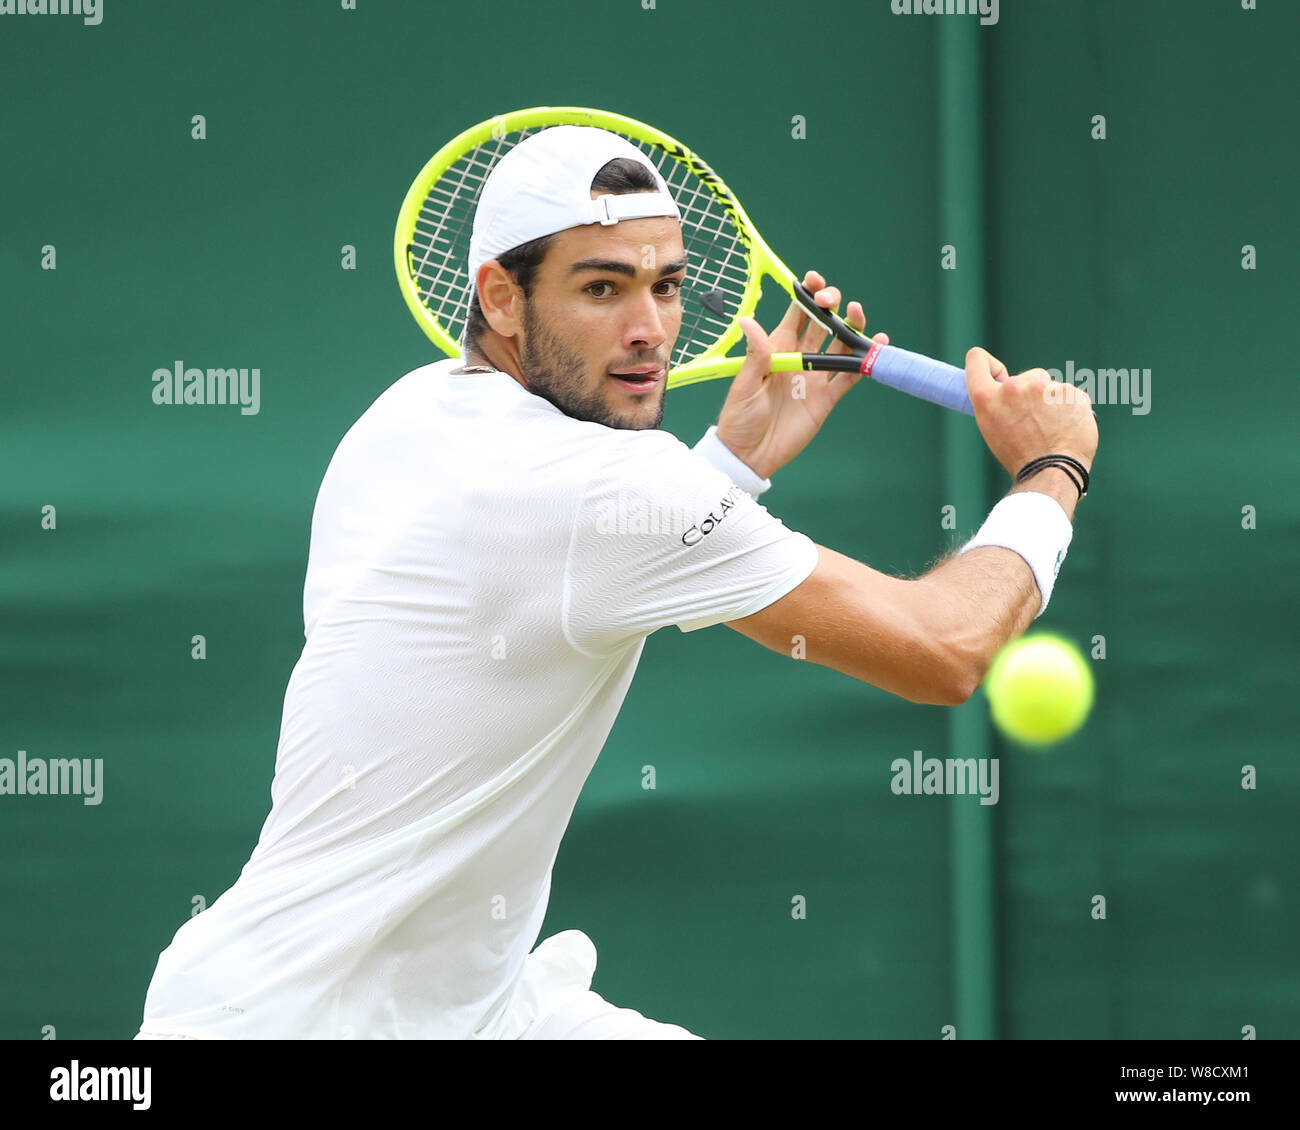 Italian tennis player Matteo Berrettini playing backhand shot during 2019  Wimbledon Championships, London, England, United Kingdom Stock Photo - Alamy